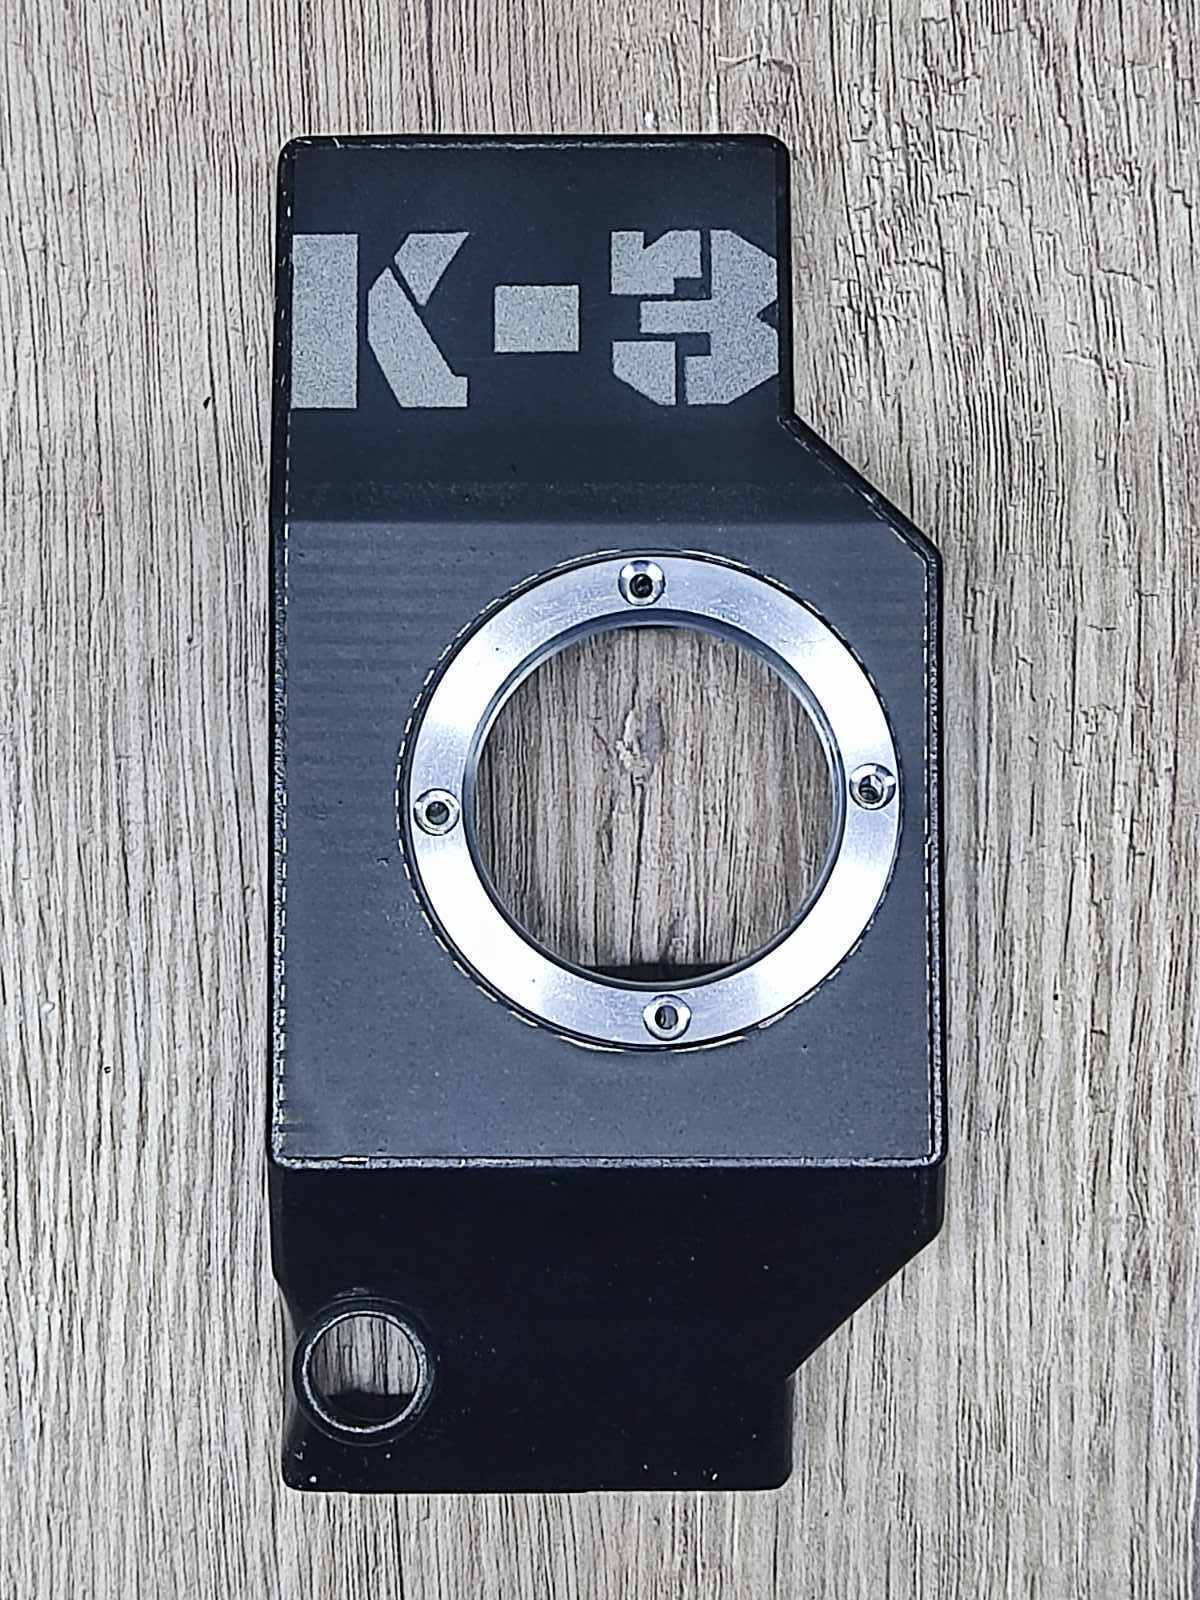 K-3 Conversion Set ARRI PL Canon Super16 Ultra16 Krasnogorsk-3 Head + Film Gate